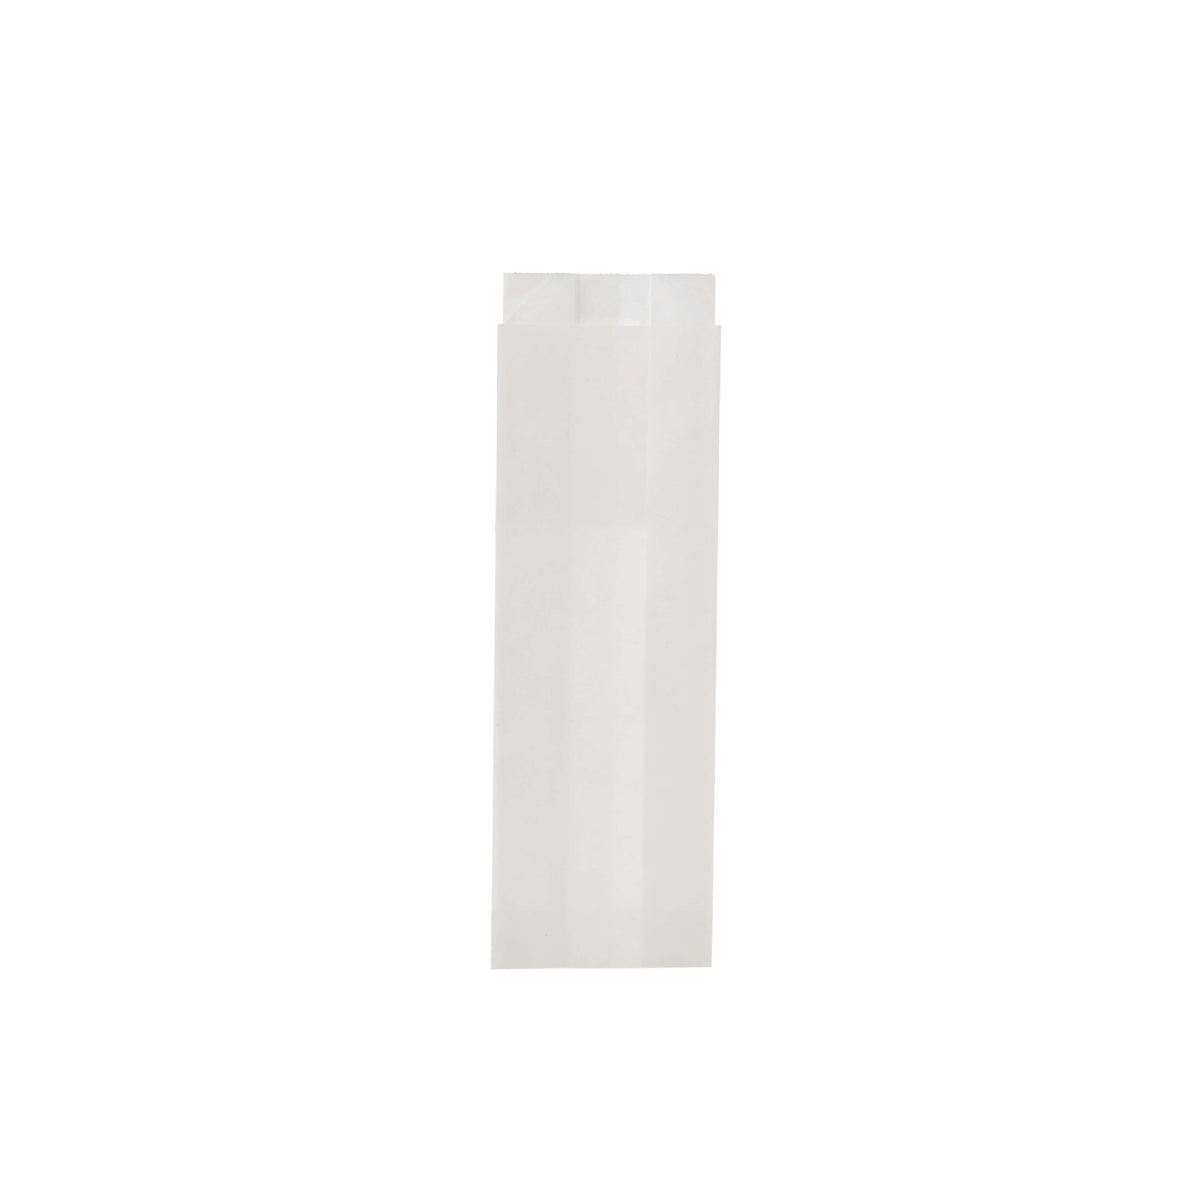 80x50x250 mm No.0 Pinch or flat bottom paper bag white - Hotpack Global